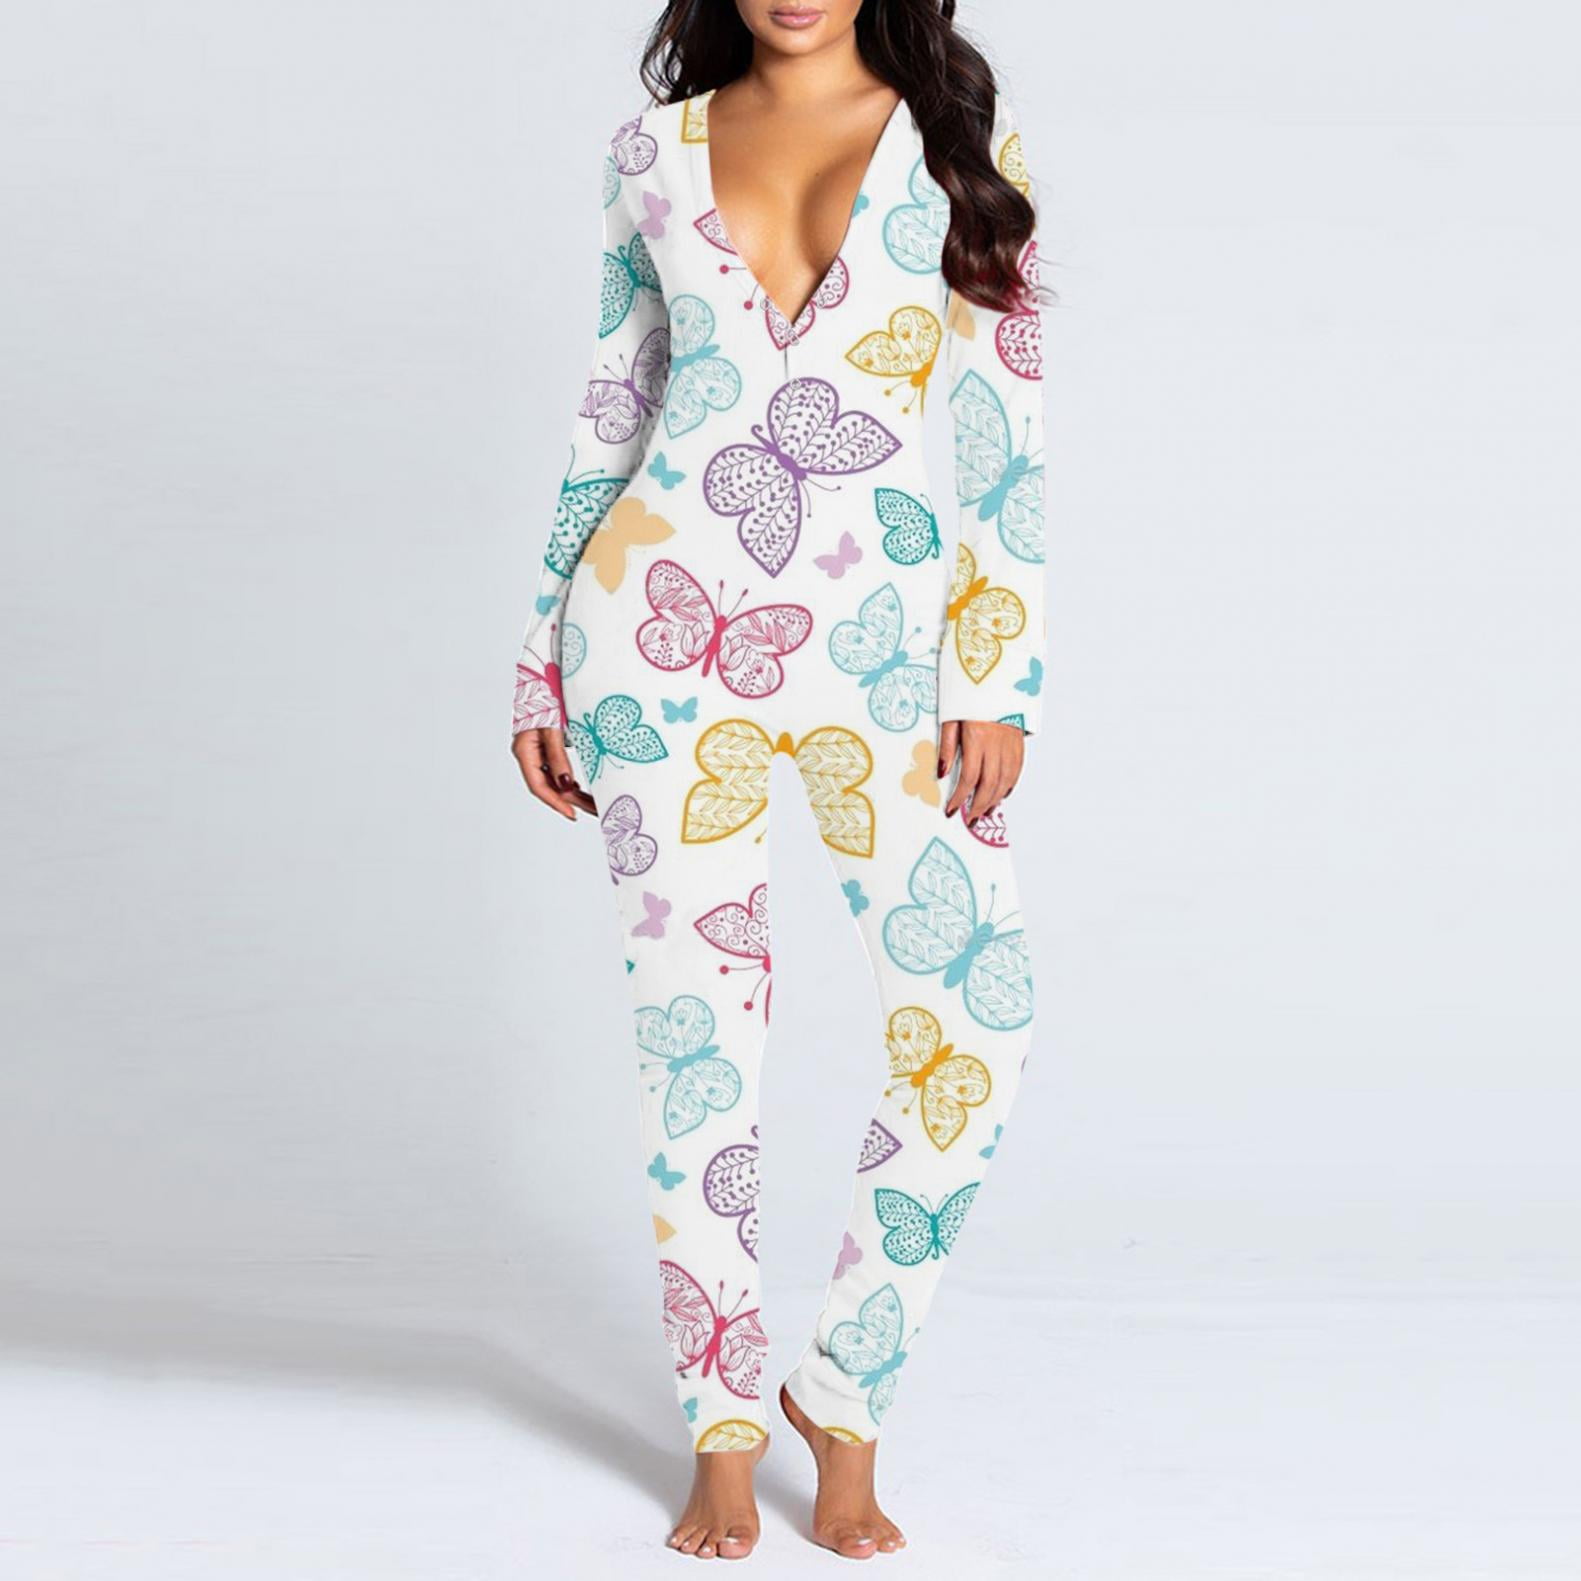 Women Jumpsuit Pajamas Halloween Onesie Sleepwear with Back Functional Buttoned Flap Adult Sleepwear Romper Jumpsuit